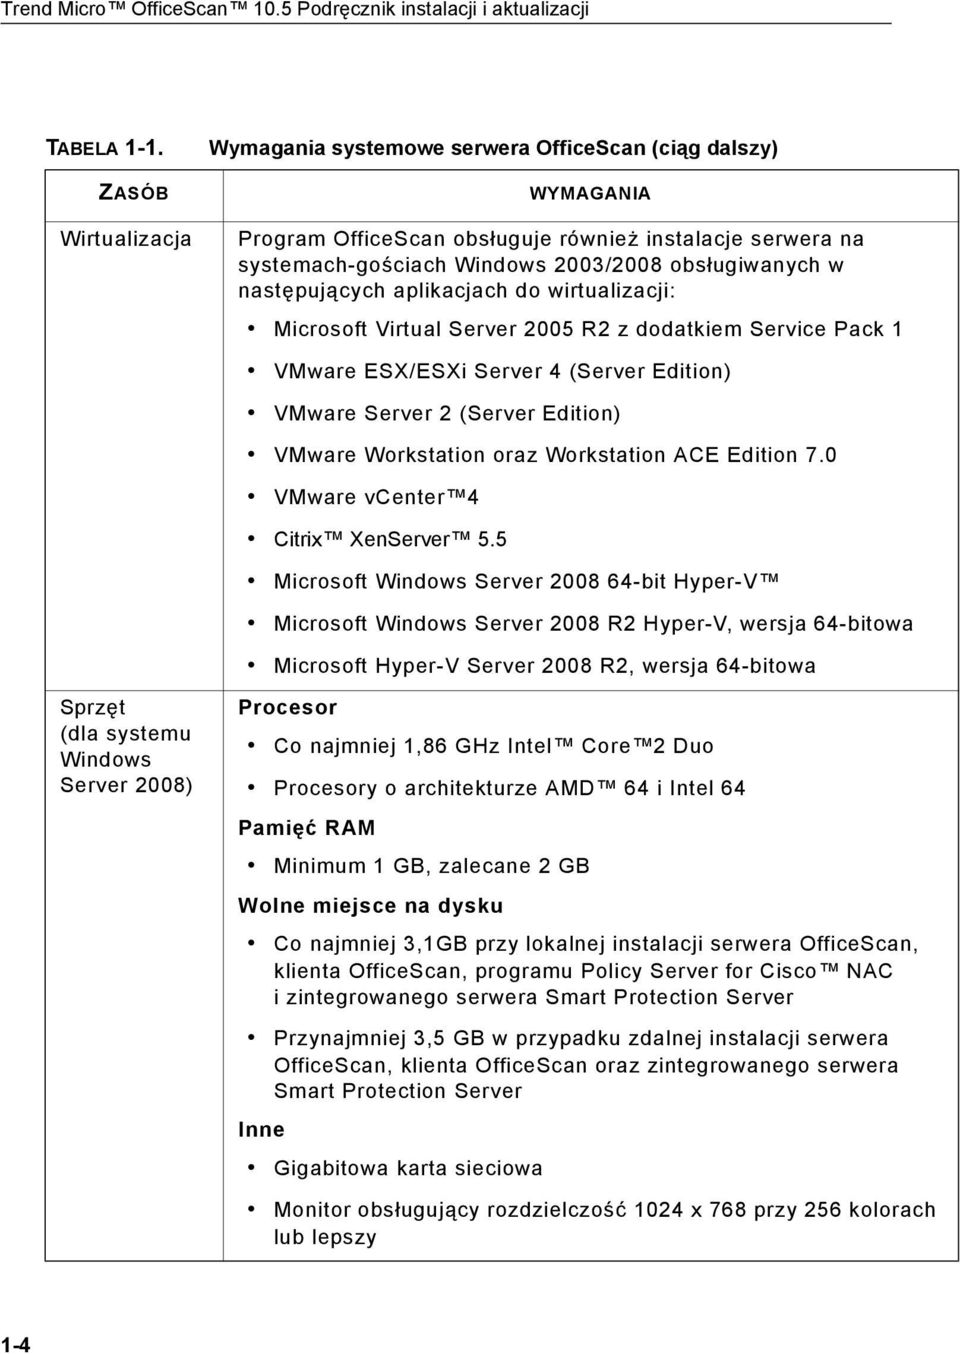 następujących aplikacjach do wirtualizacji: Microsoft Virtual Server 2005 R2 z dodatkiem Service Pack 1 VMware ESX/ESXi Server 4 (Server Edition) VMware Server 2 (Server Edition) VMware Workstation